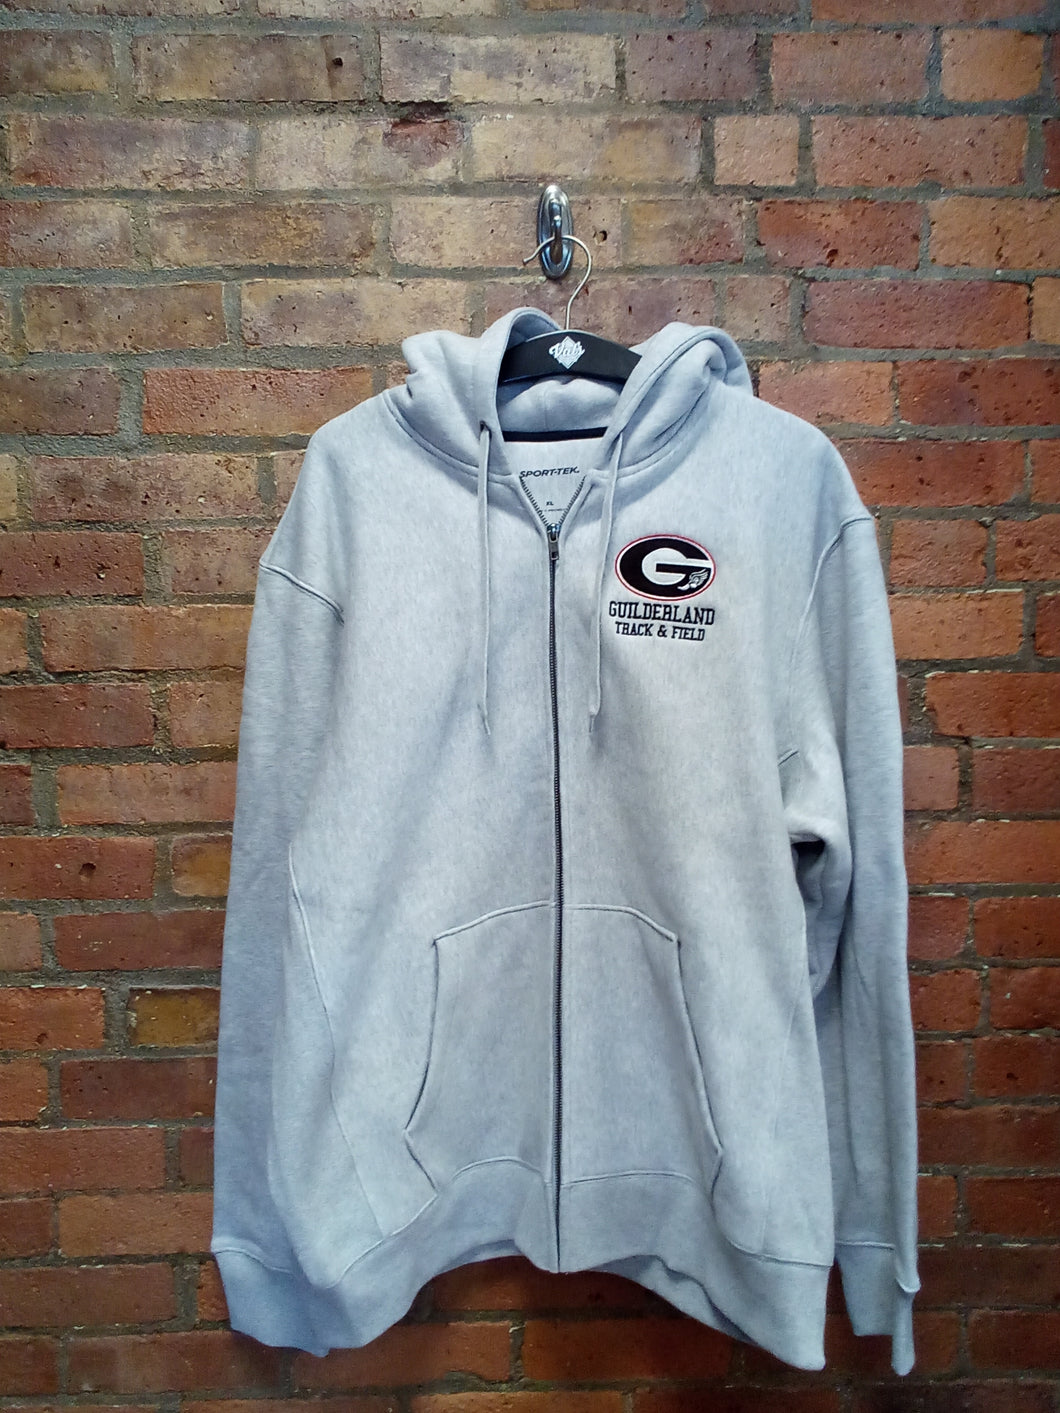 CLEARANCE - Guilderland Track & Field Zip Up Hooded Sweatshirt - Size XL